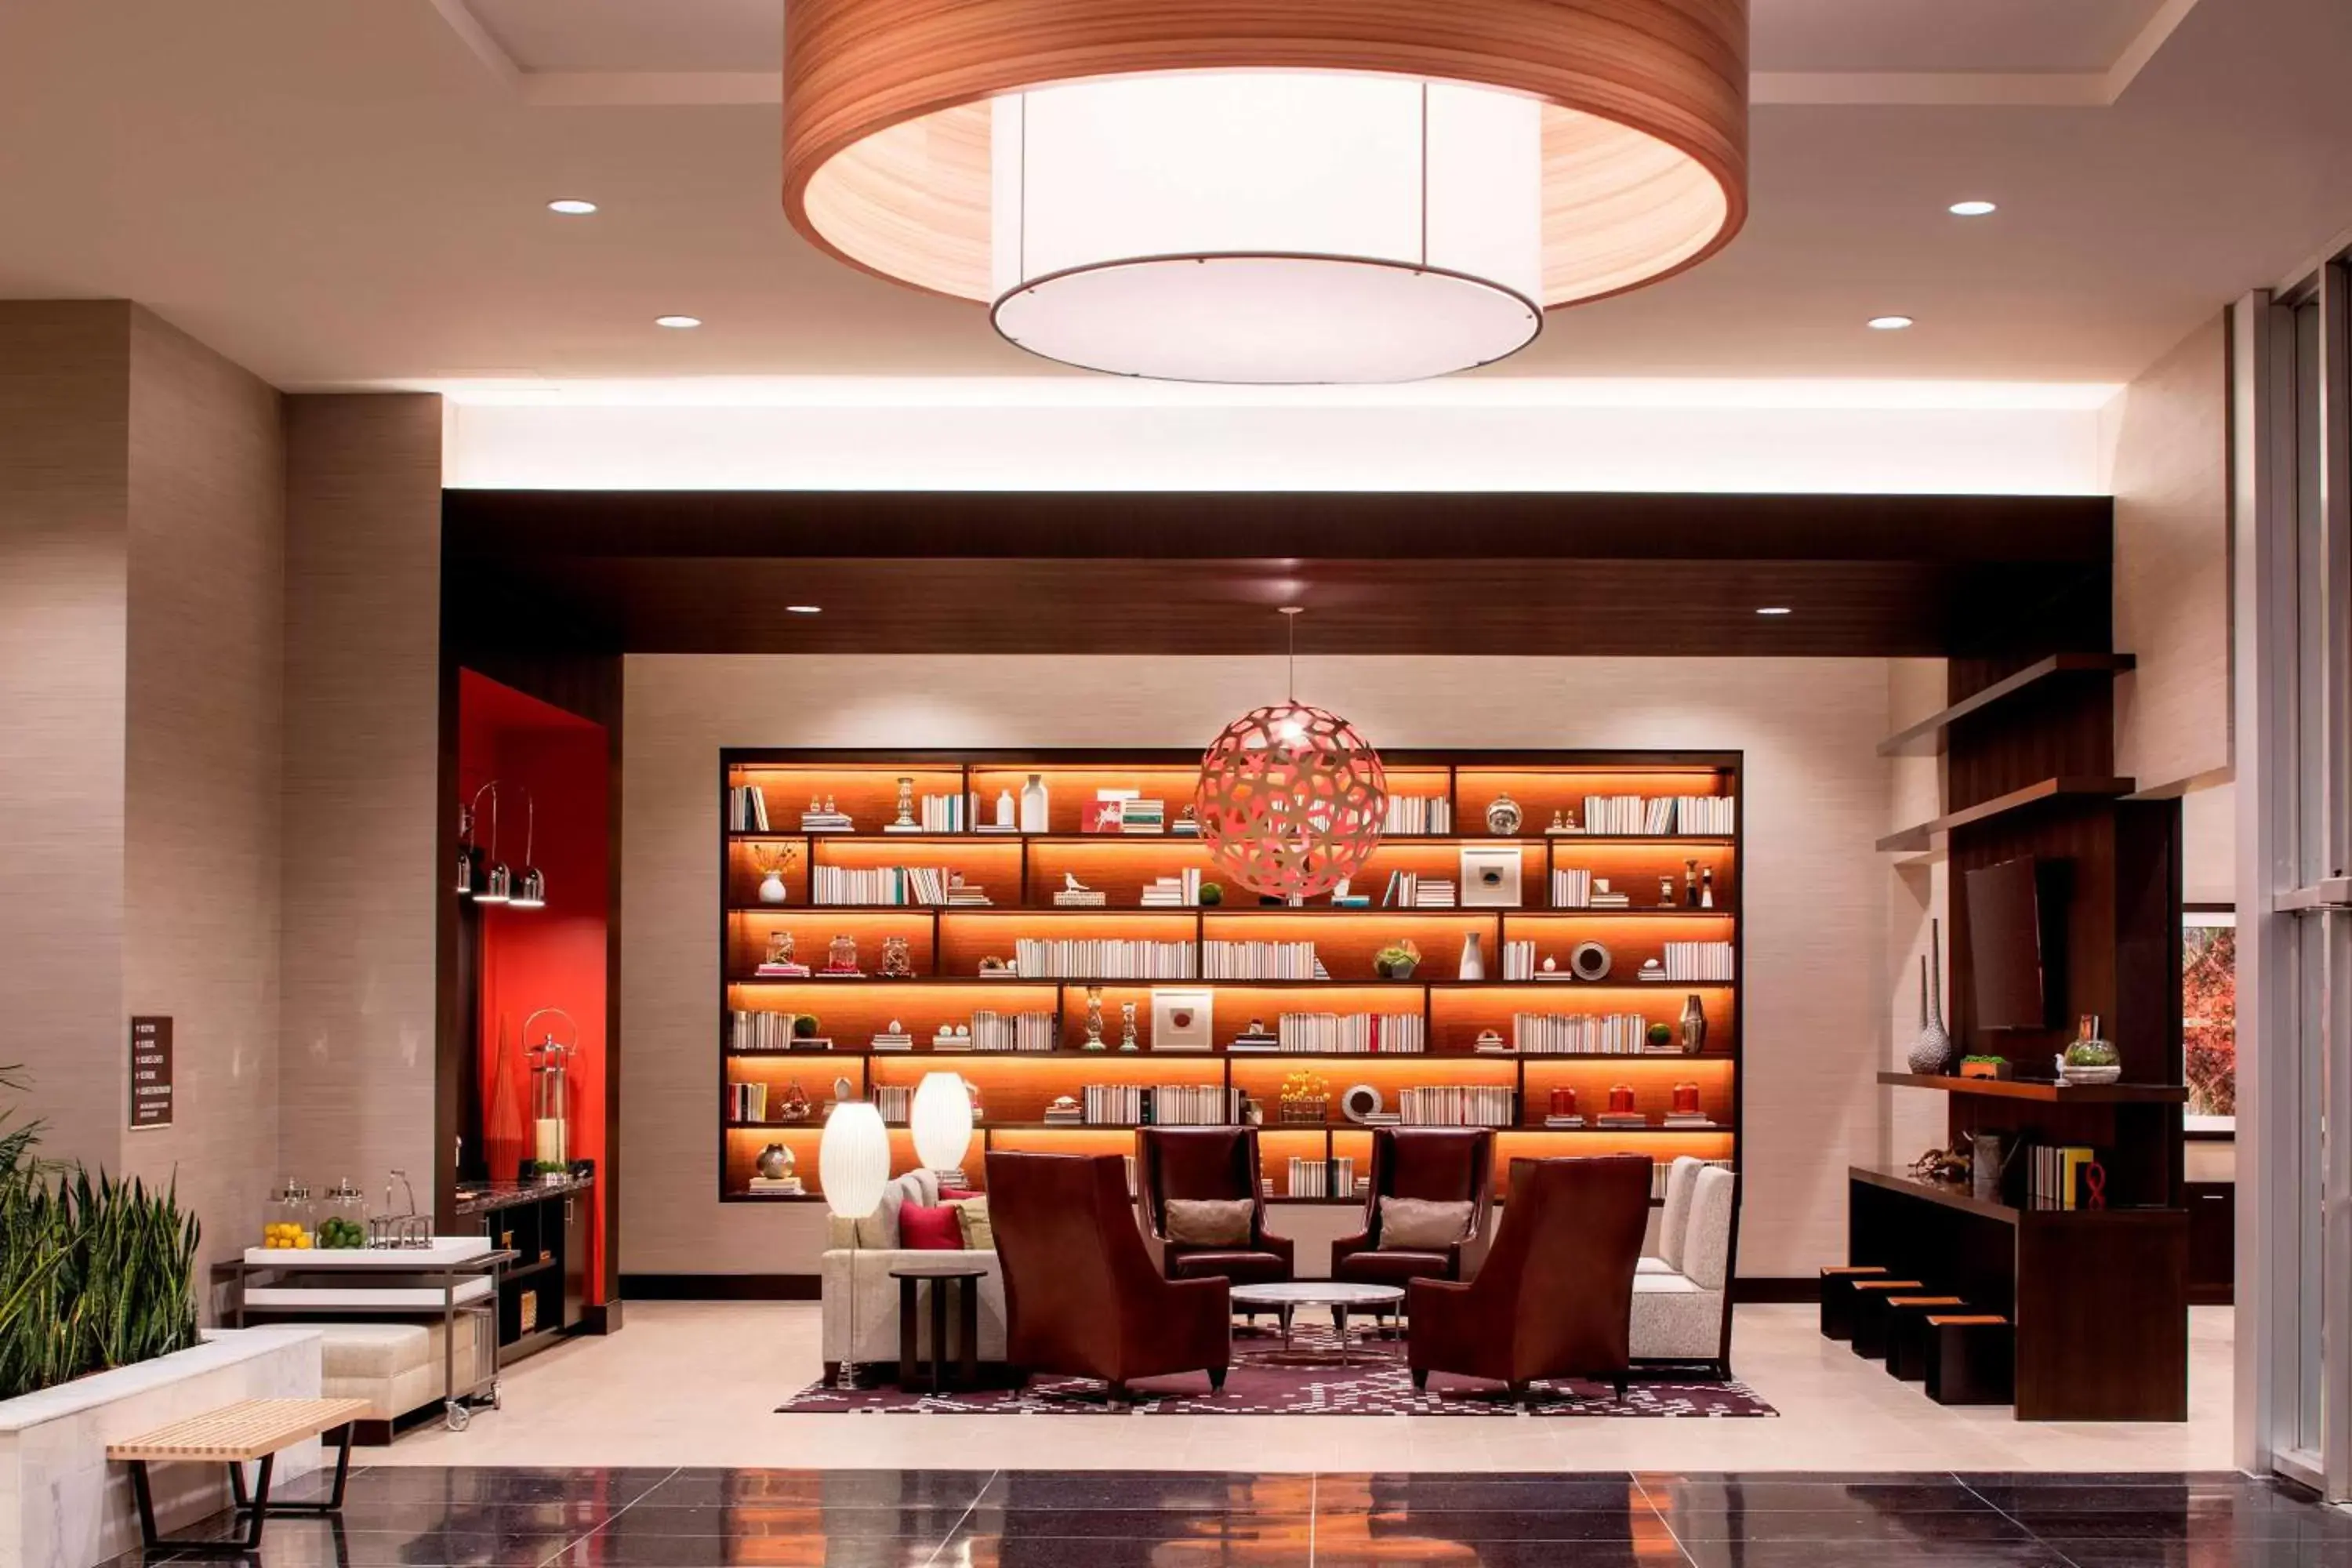 Lobby or reception in Hilton Garden Inn Downtown Dallas